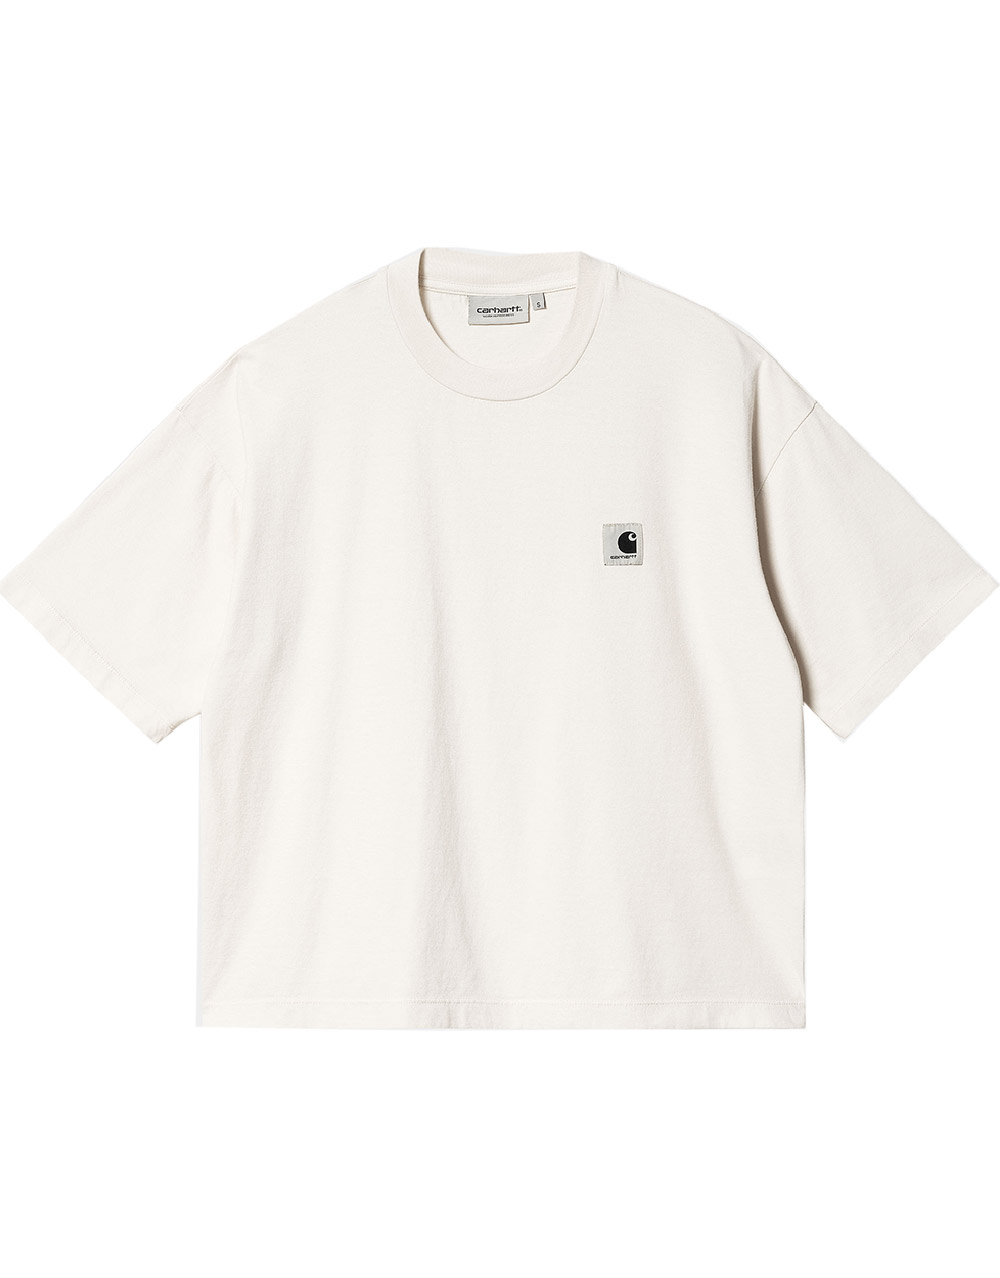 Carhartt WIP – Women’s S/S Nelson T-Shirt